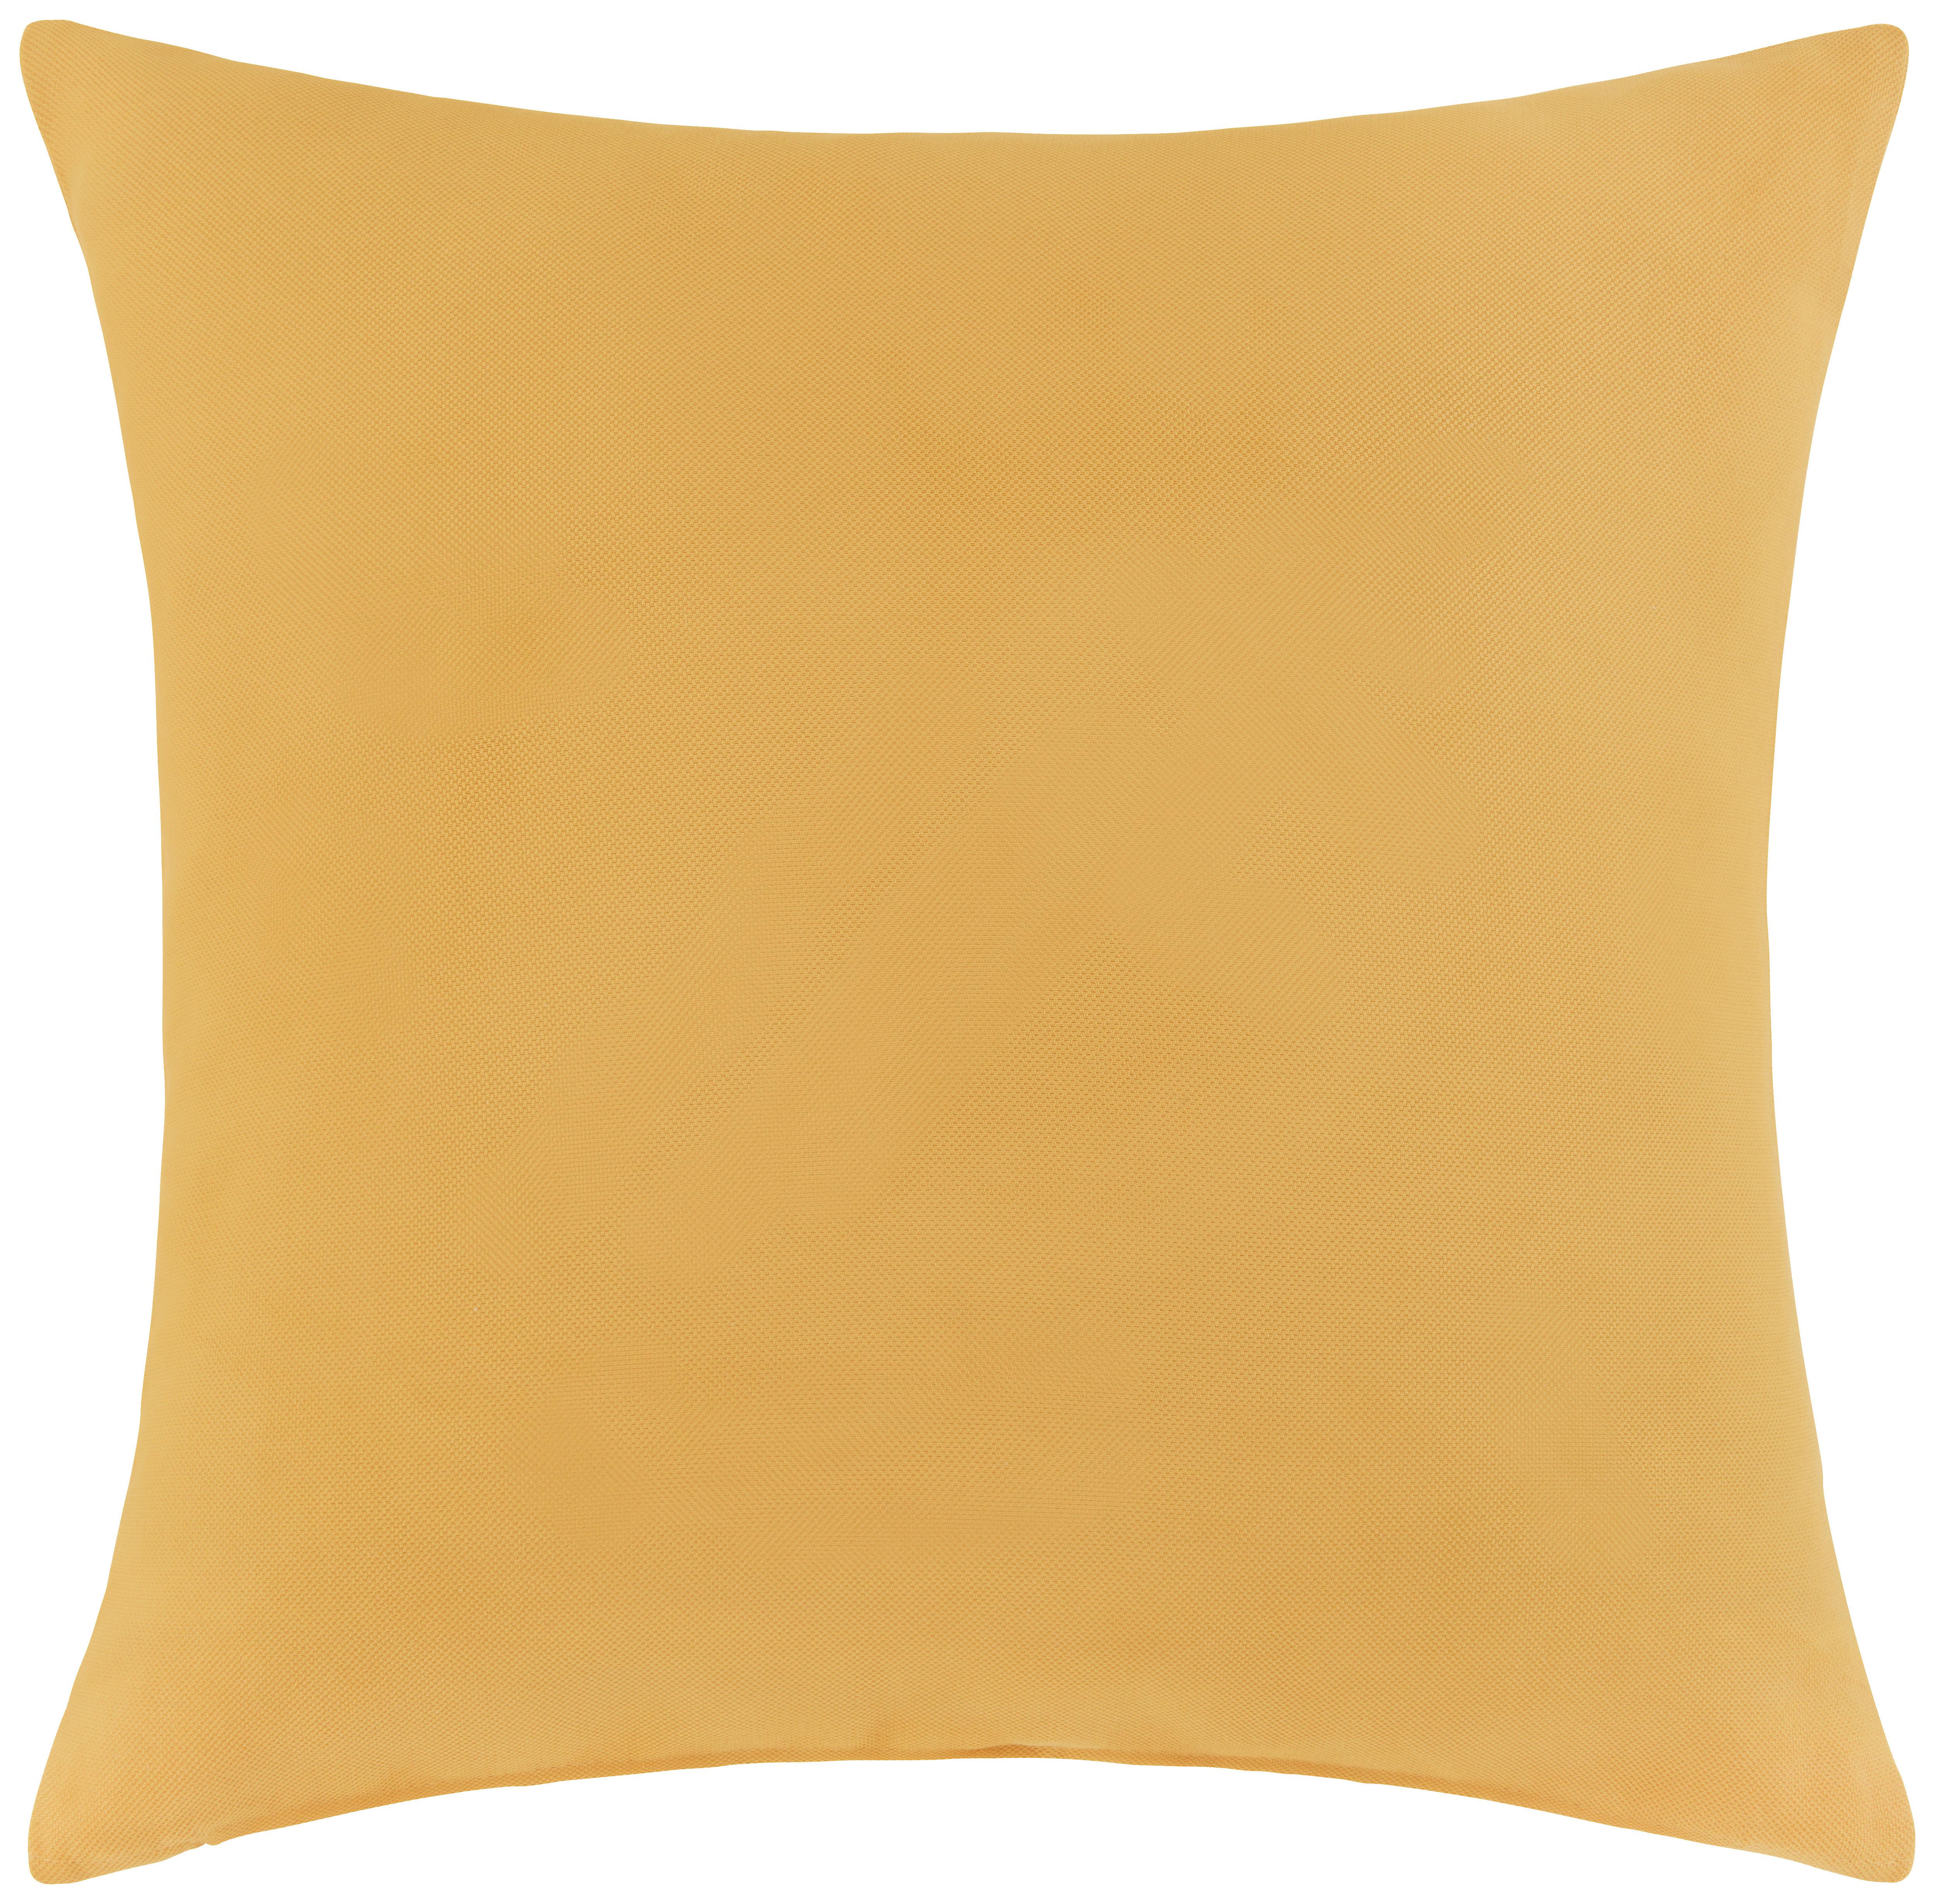 Zierkissen Felix in Gelb ca. 60x60cm - Gelb, Textil (60/60cm) - Modern Living